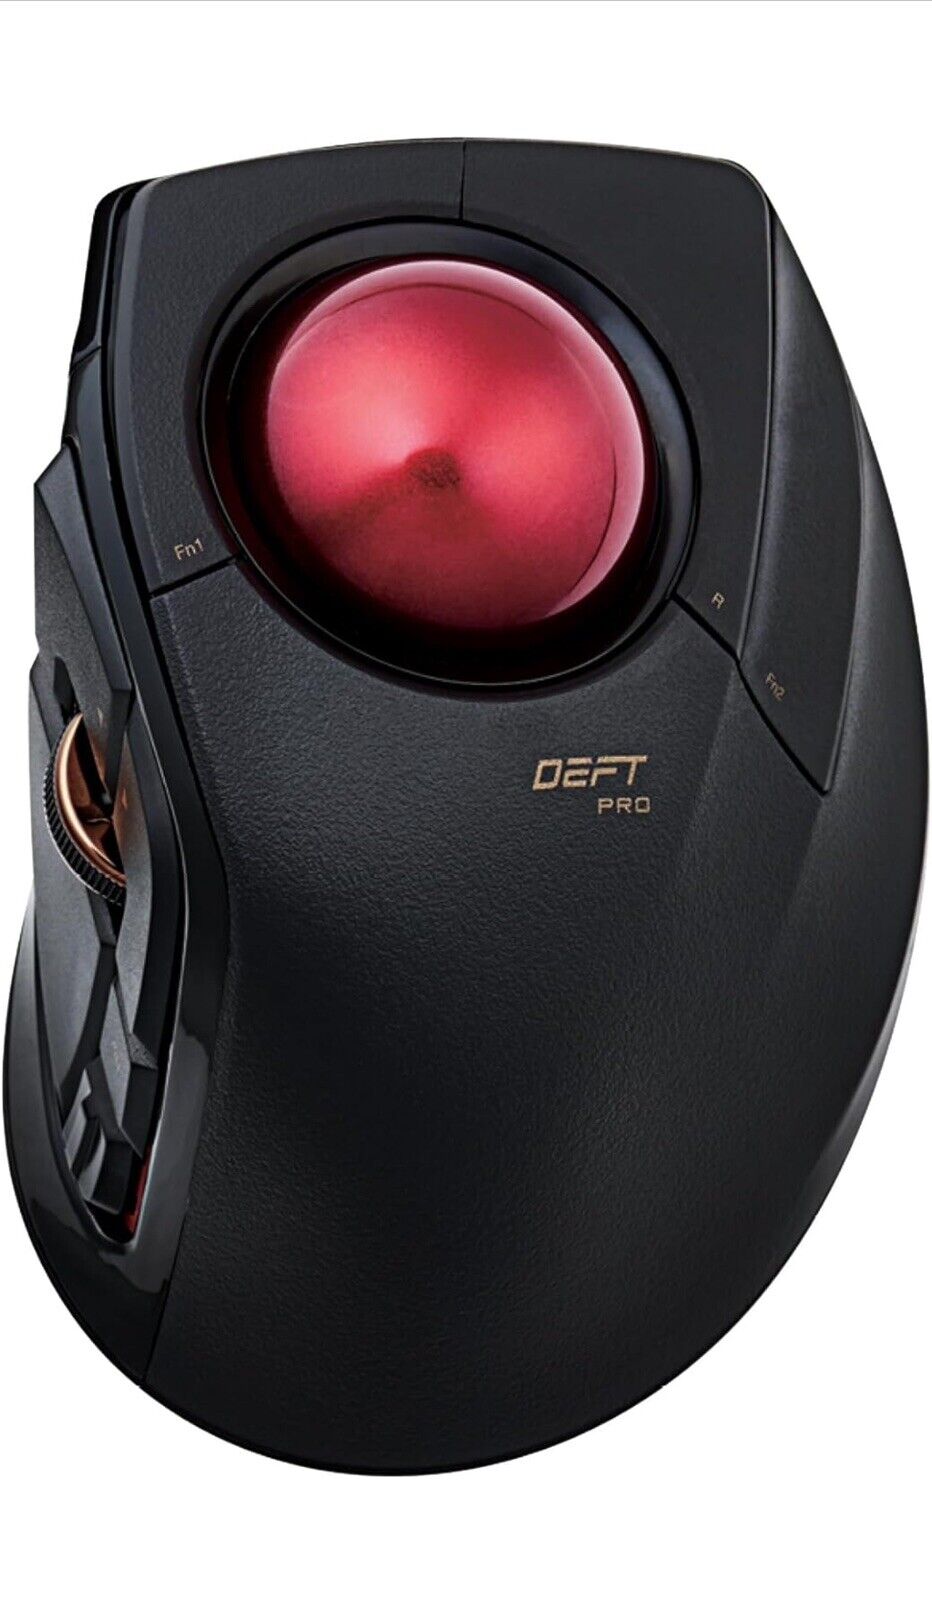 ELECOM DEFT PRO Trackball Mouse Wired/Wireless Bluetooth Ergonomic Design -Black